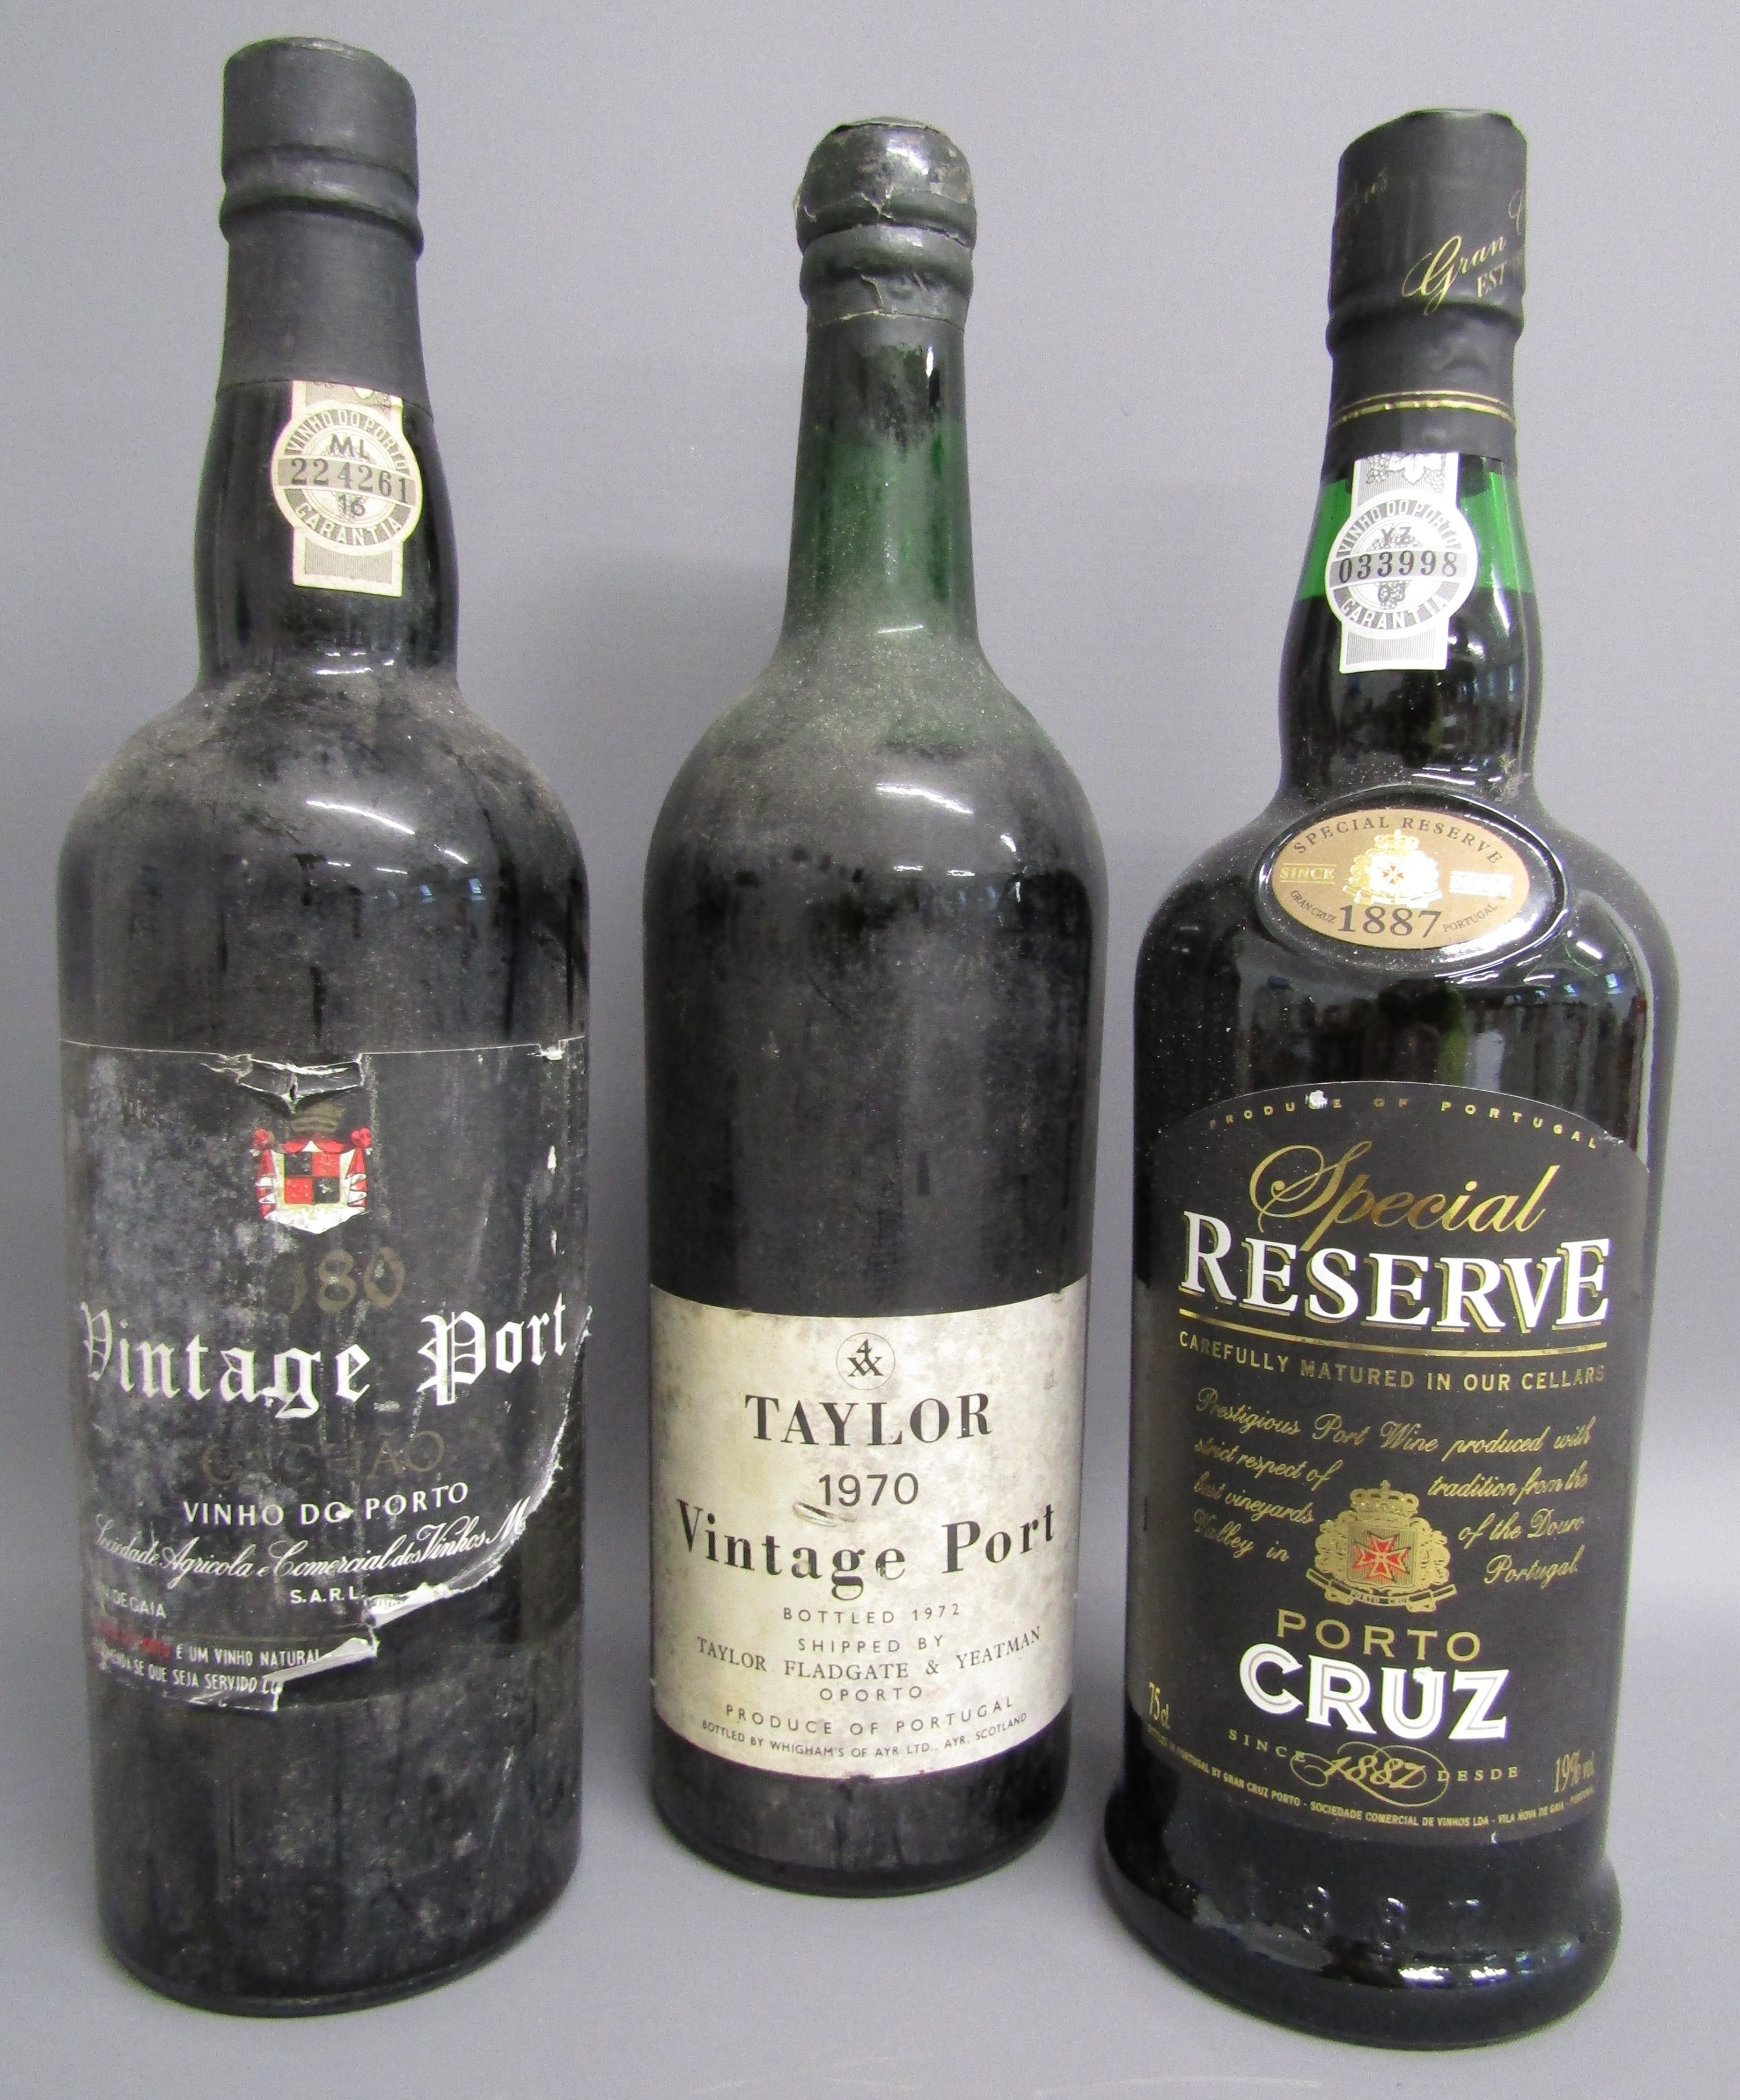 3 bottles of port - Cachao vintage port, Taylor 1970 vintage port and Special Reserve Porto Crua